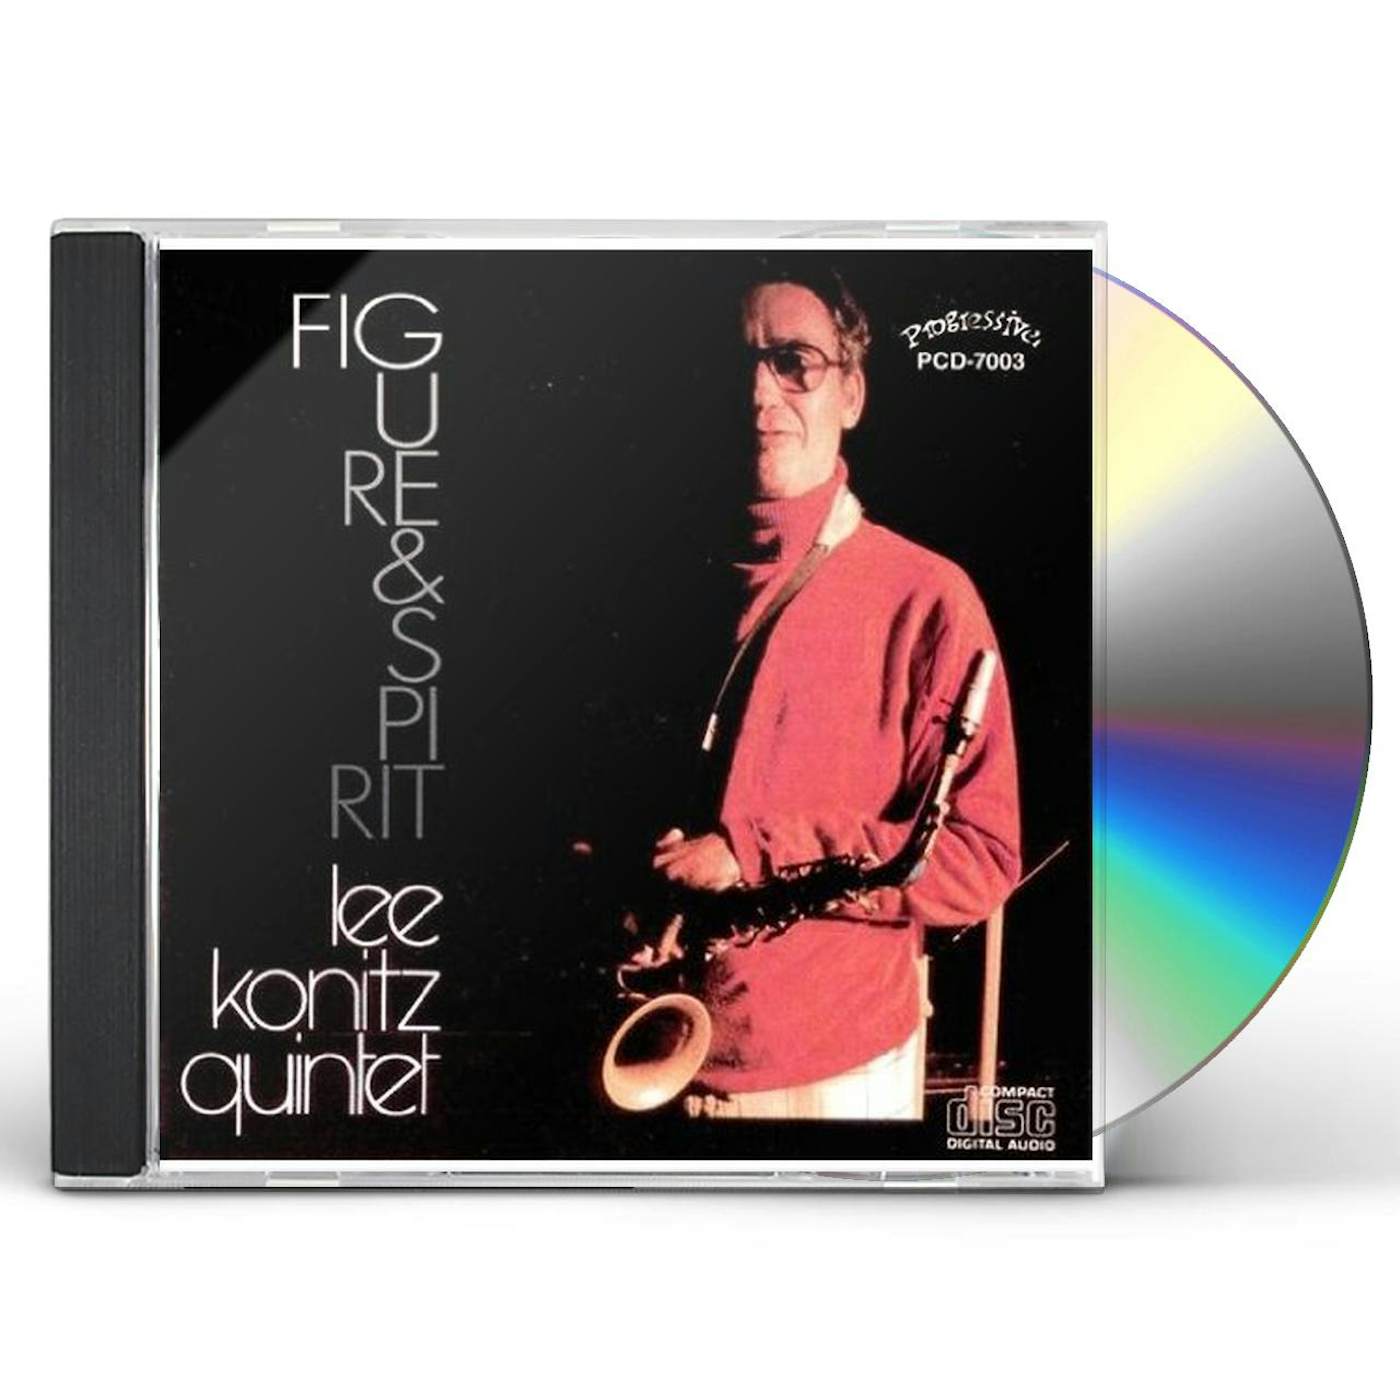 Lee Konitz FIGURE & SPIRIT CD